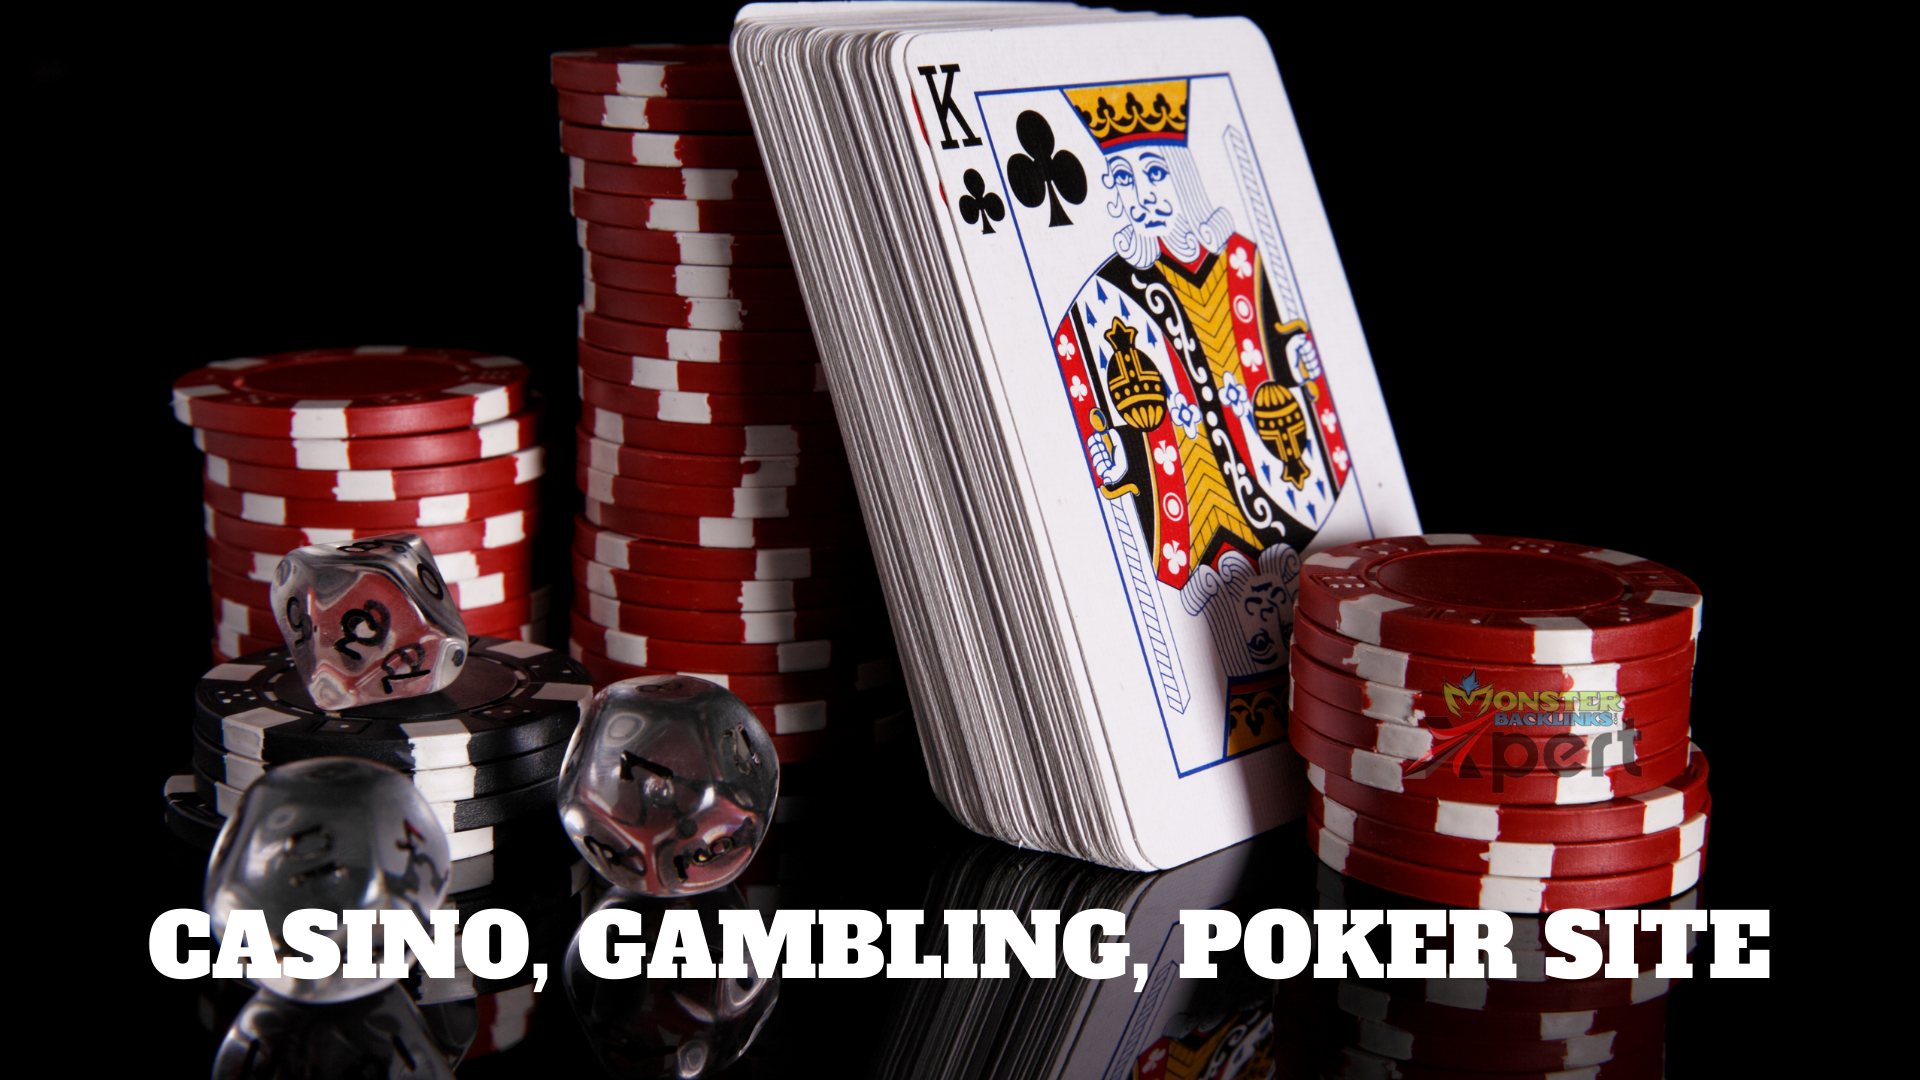 Your website Casino, Poker, Gambling with High DA PA 100 PBN's Backlinks